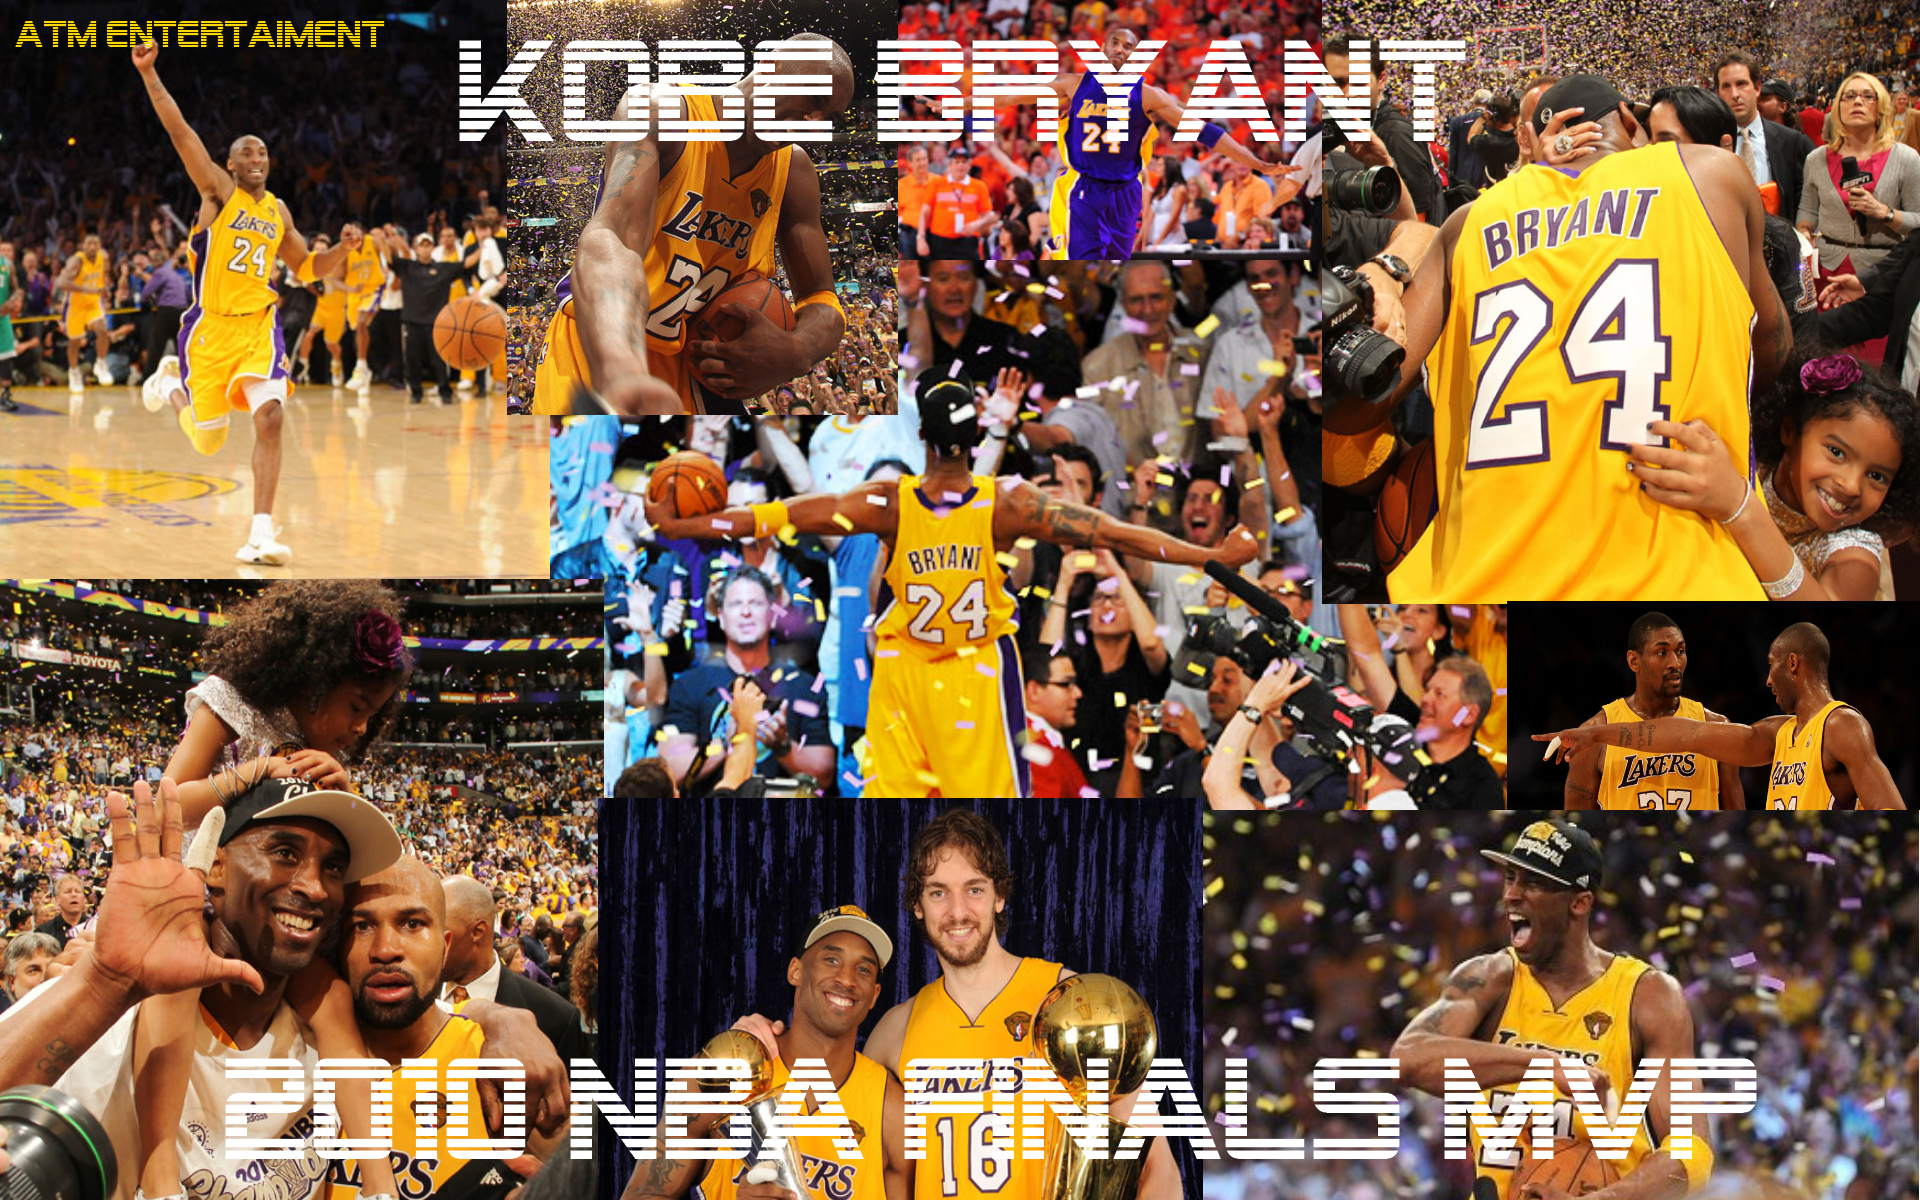 Kobe Bryant 2010 Finals MVP Downloads! | ATM Entertainment1920 x 1200